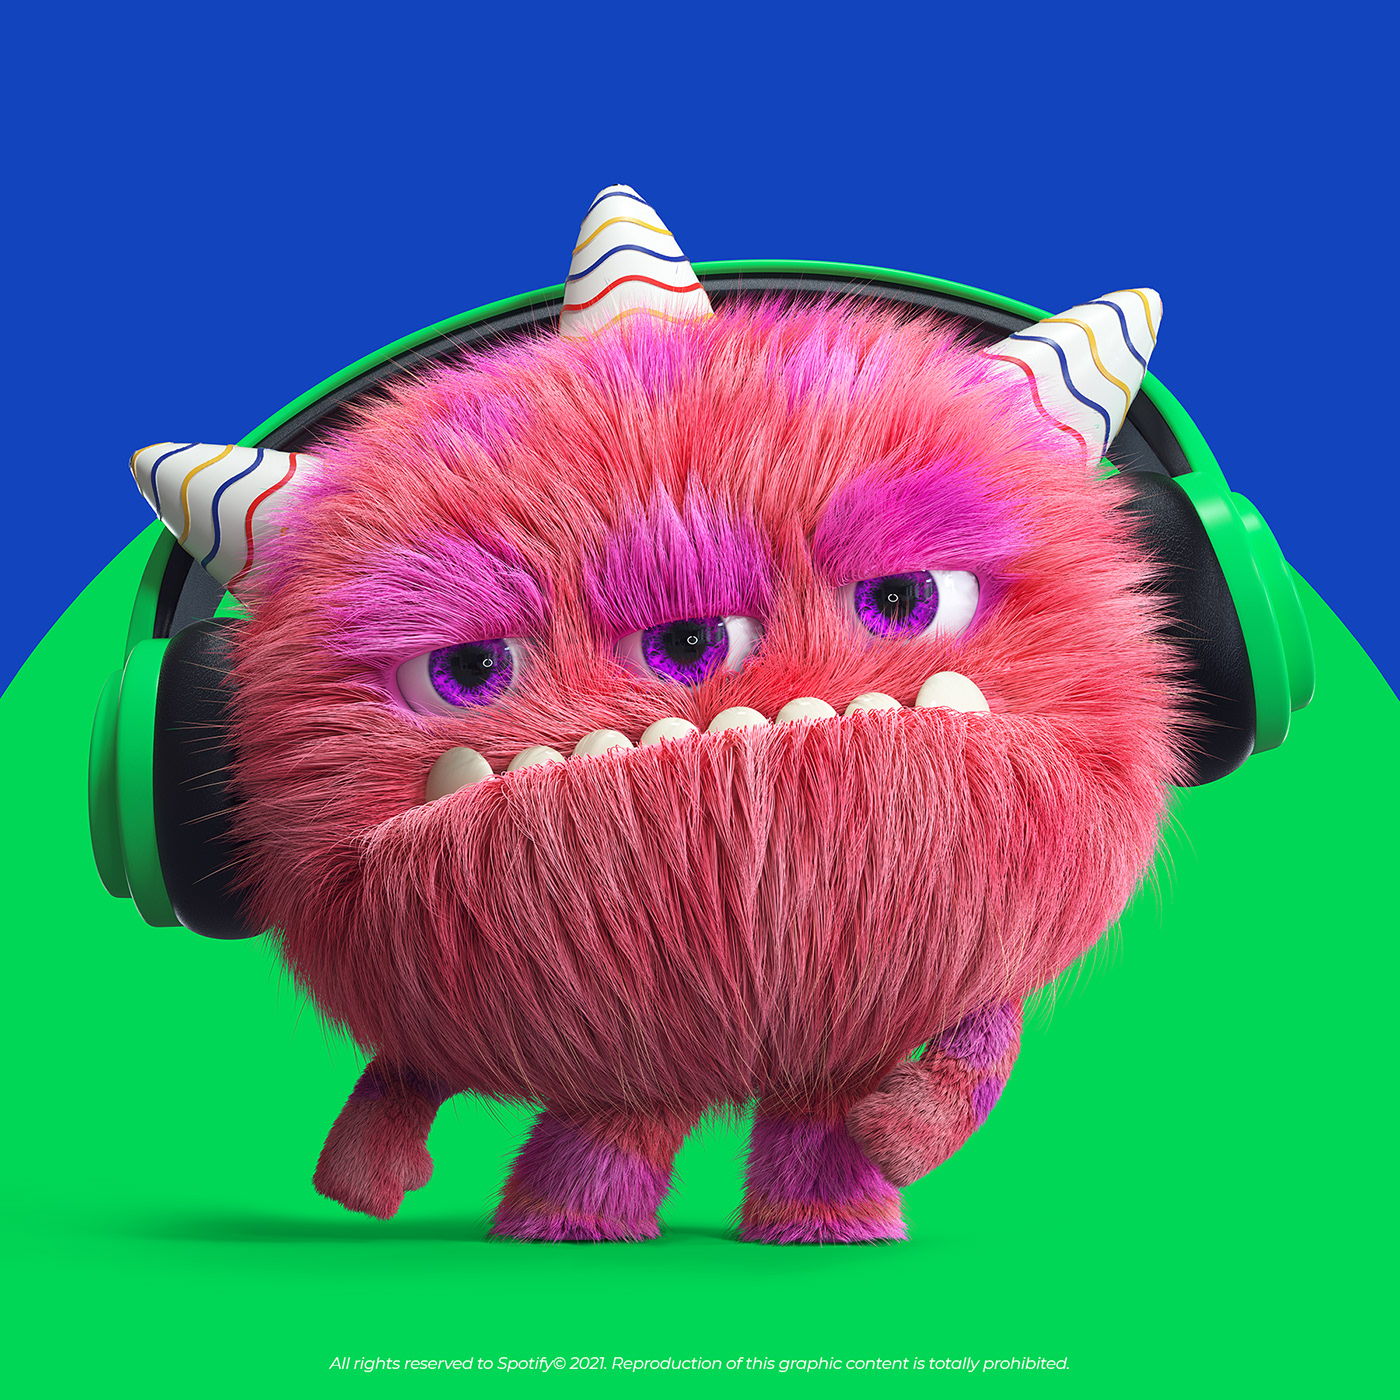 #animation #art #cartoon #character #hair #illustration #monster #music #Spotify #furry